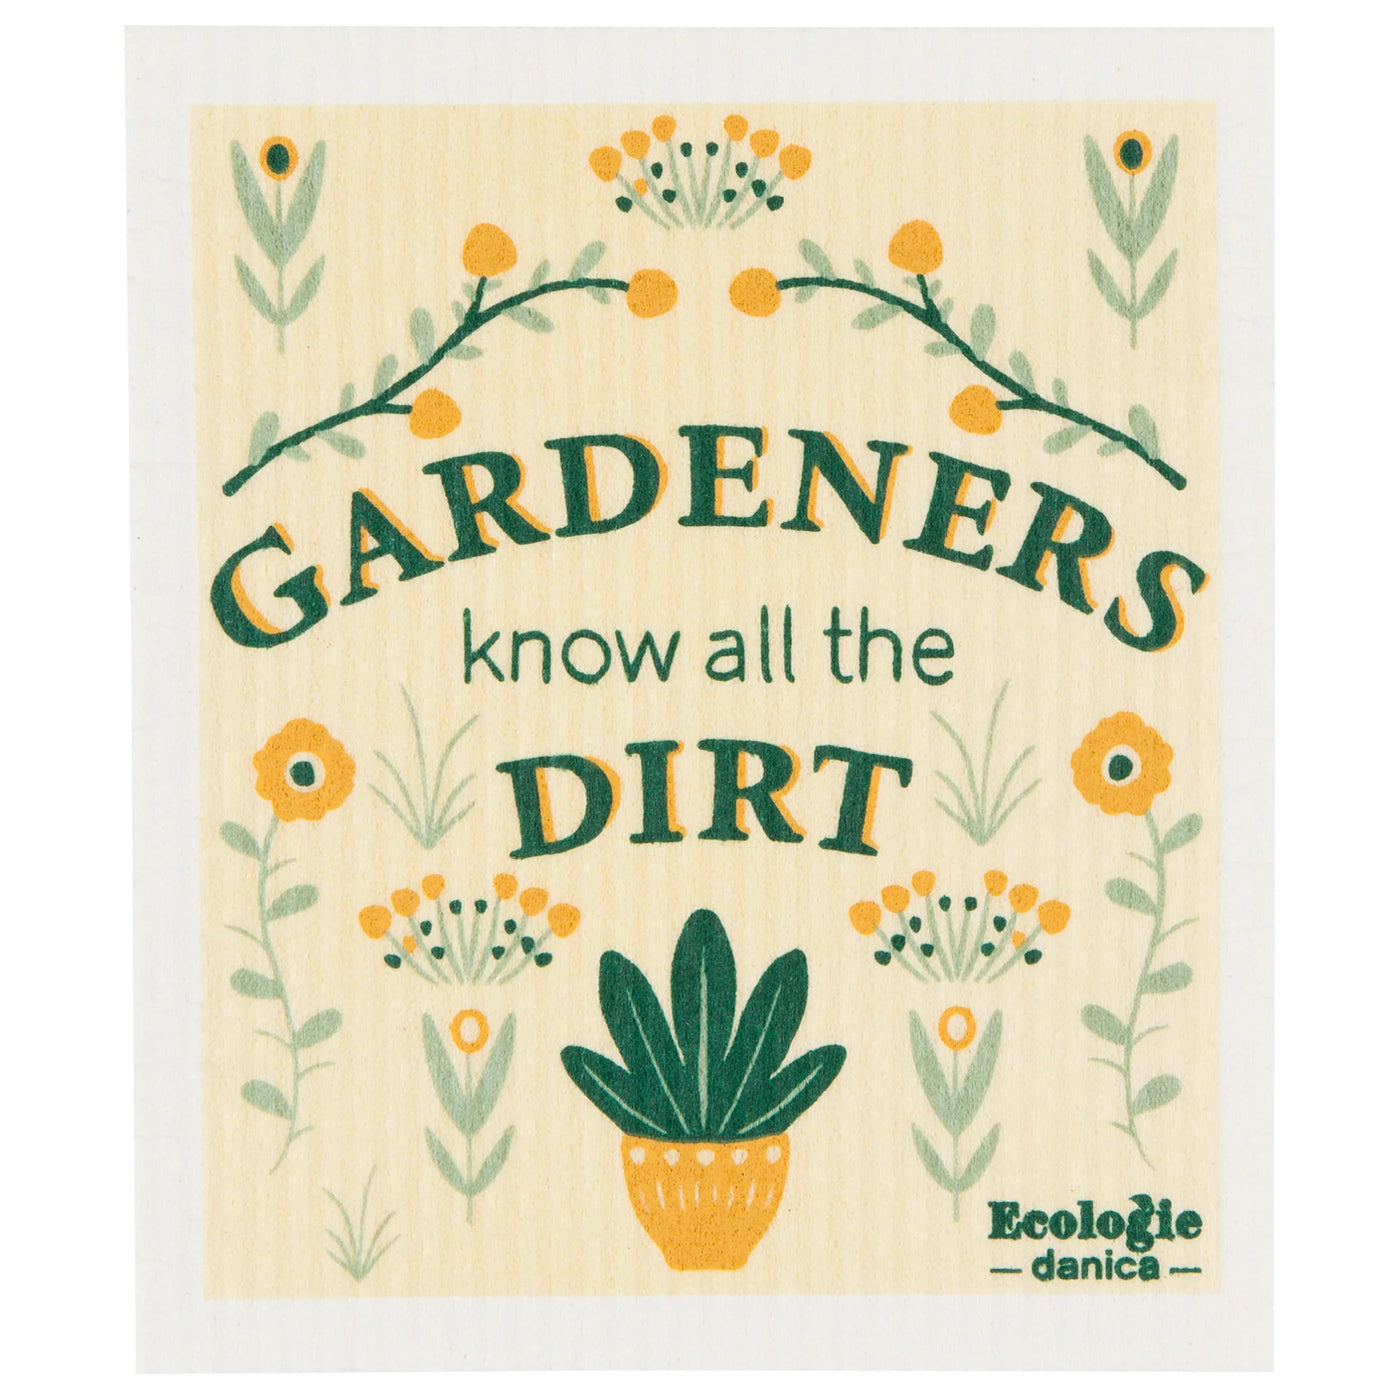 Smarty Plants (Gardeners Know all the Dirt) Swedish Dishcloth